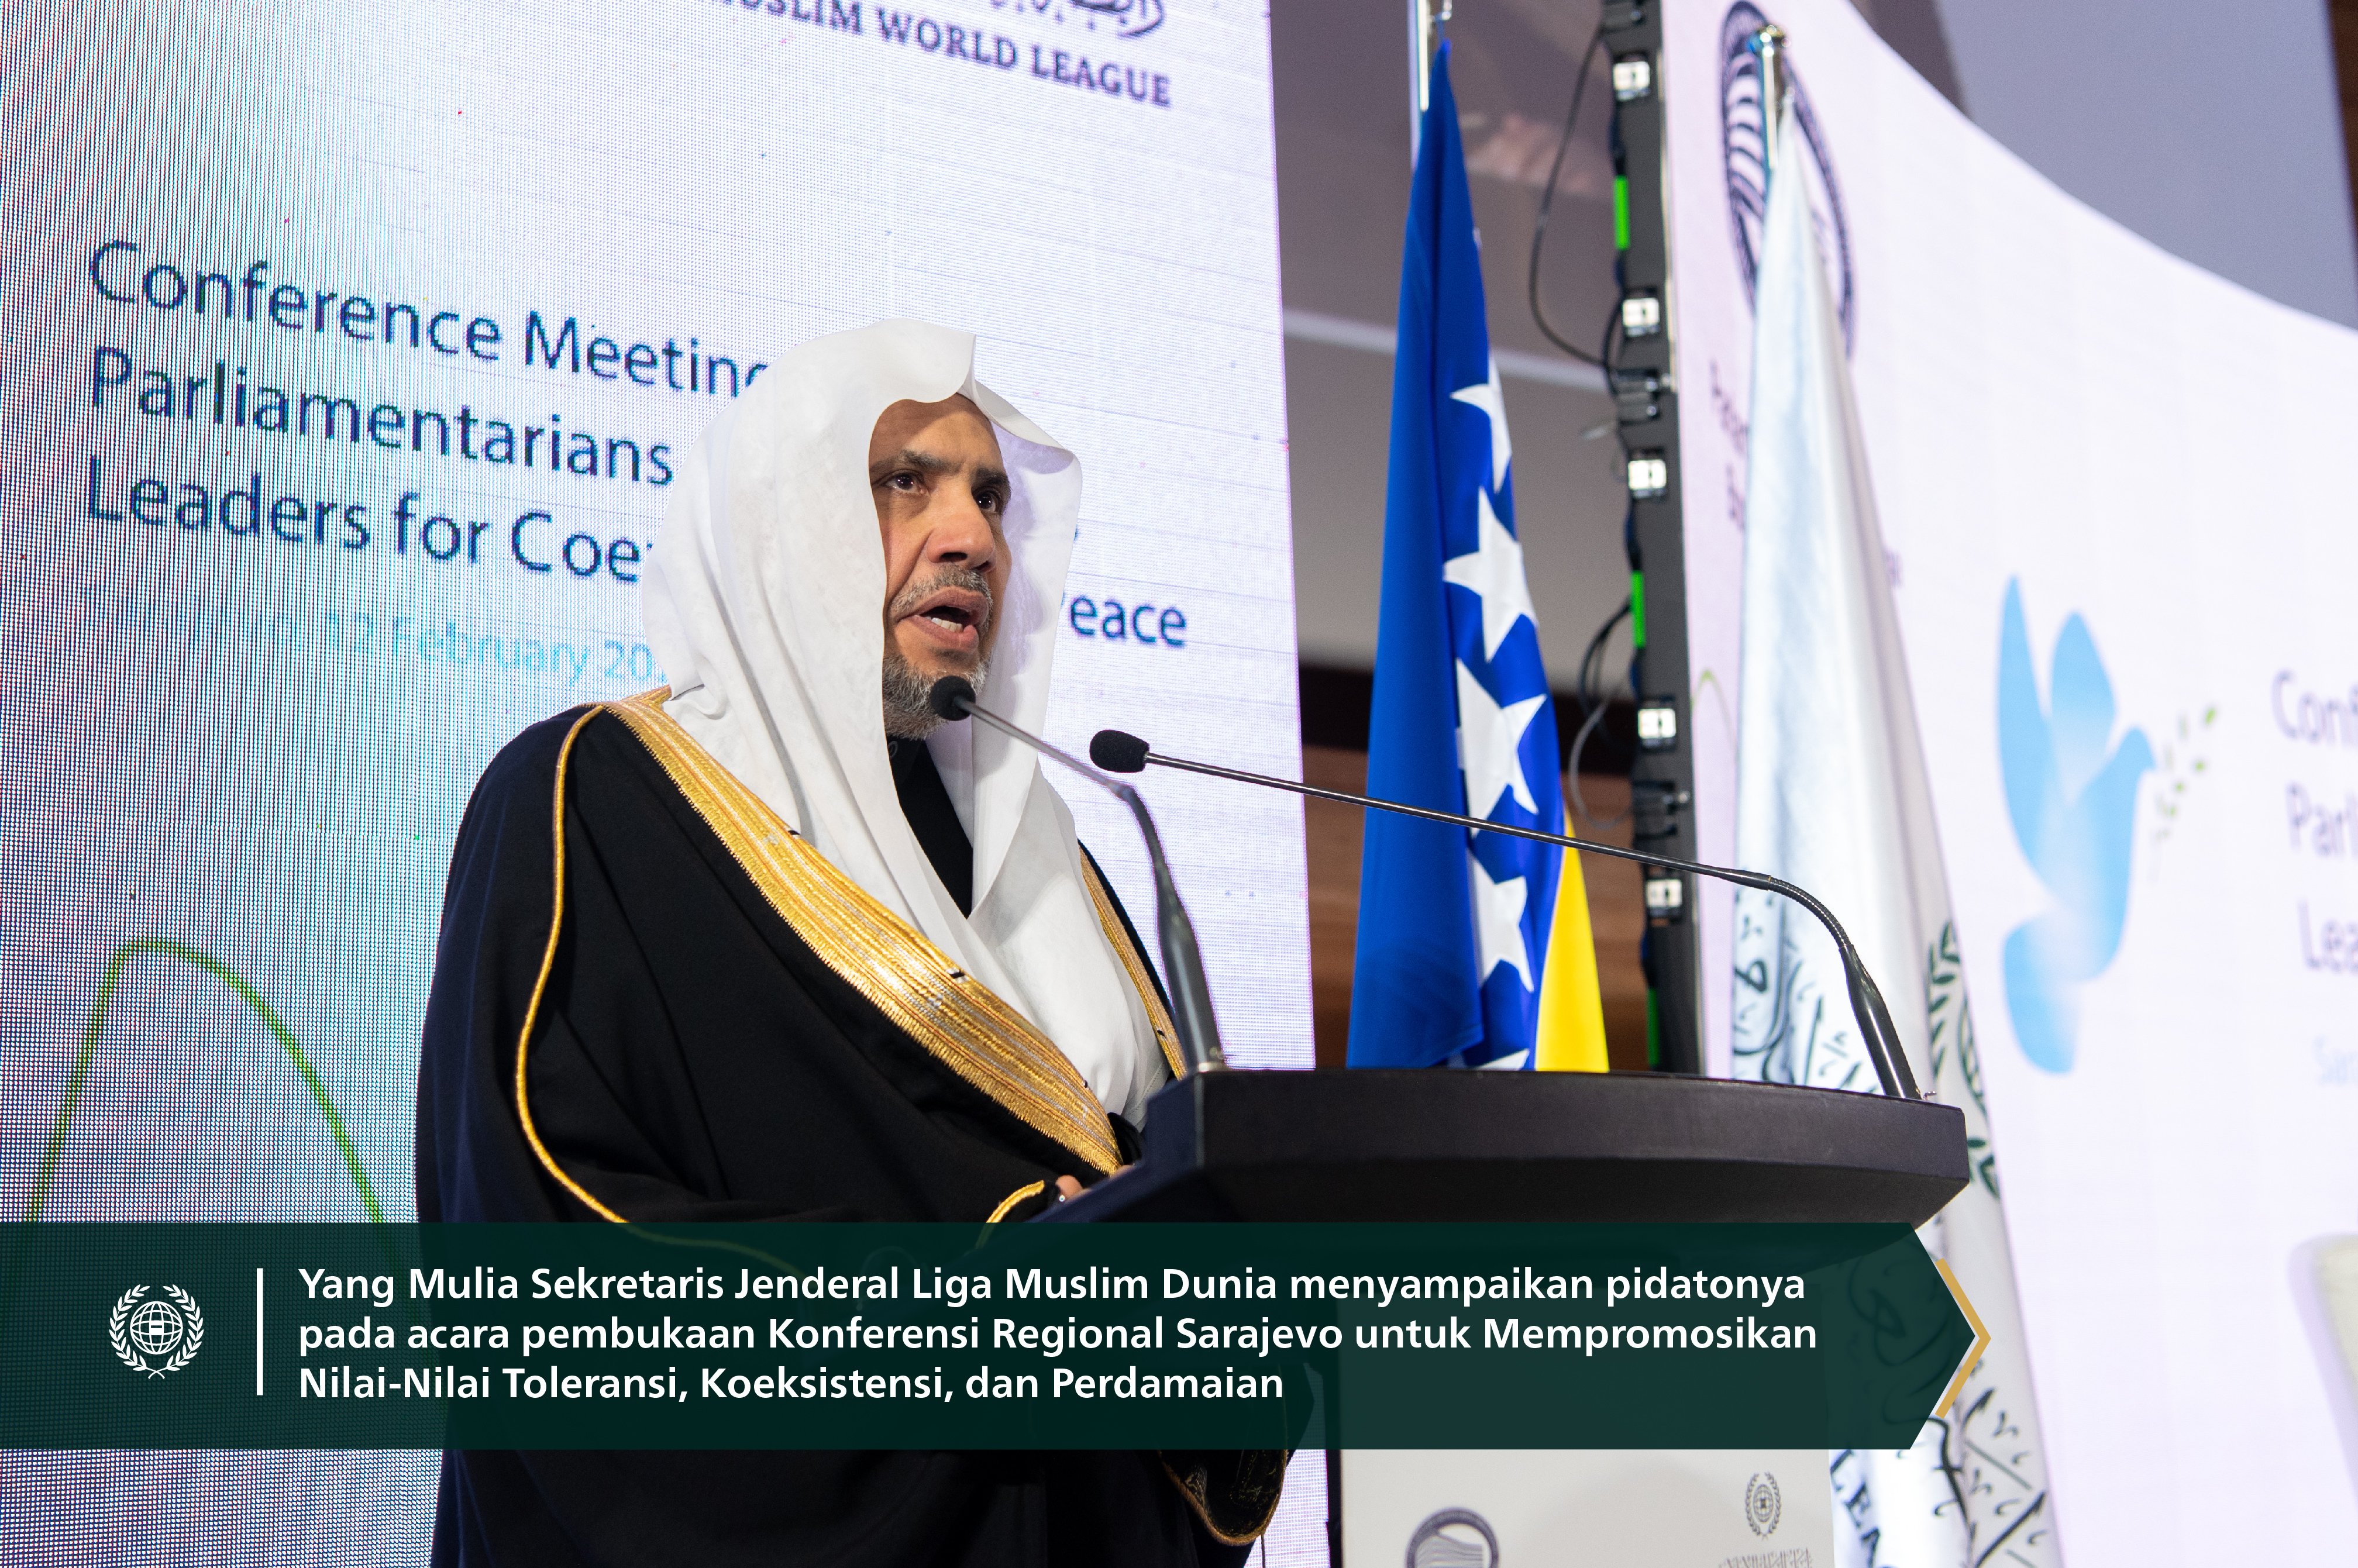 Yang Mulia Sekretaris Jenderal Liga Muslim Dunia, Ketua Asosiasi Ulama Muslim, Syekh Dr. Mohammed Al-issa berpartisipasi bersama Yang Mulia Presiden Bosnia dalam pembukaan konferensi regional yang mempromosikan nilai-nilai hidup berdampingan dan perdamaian